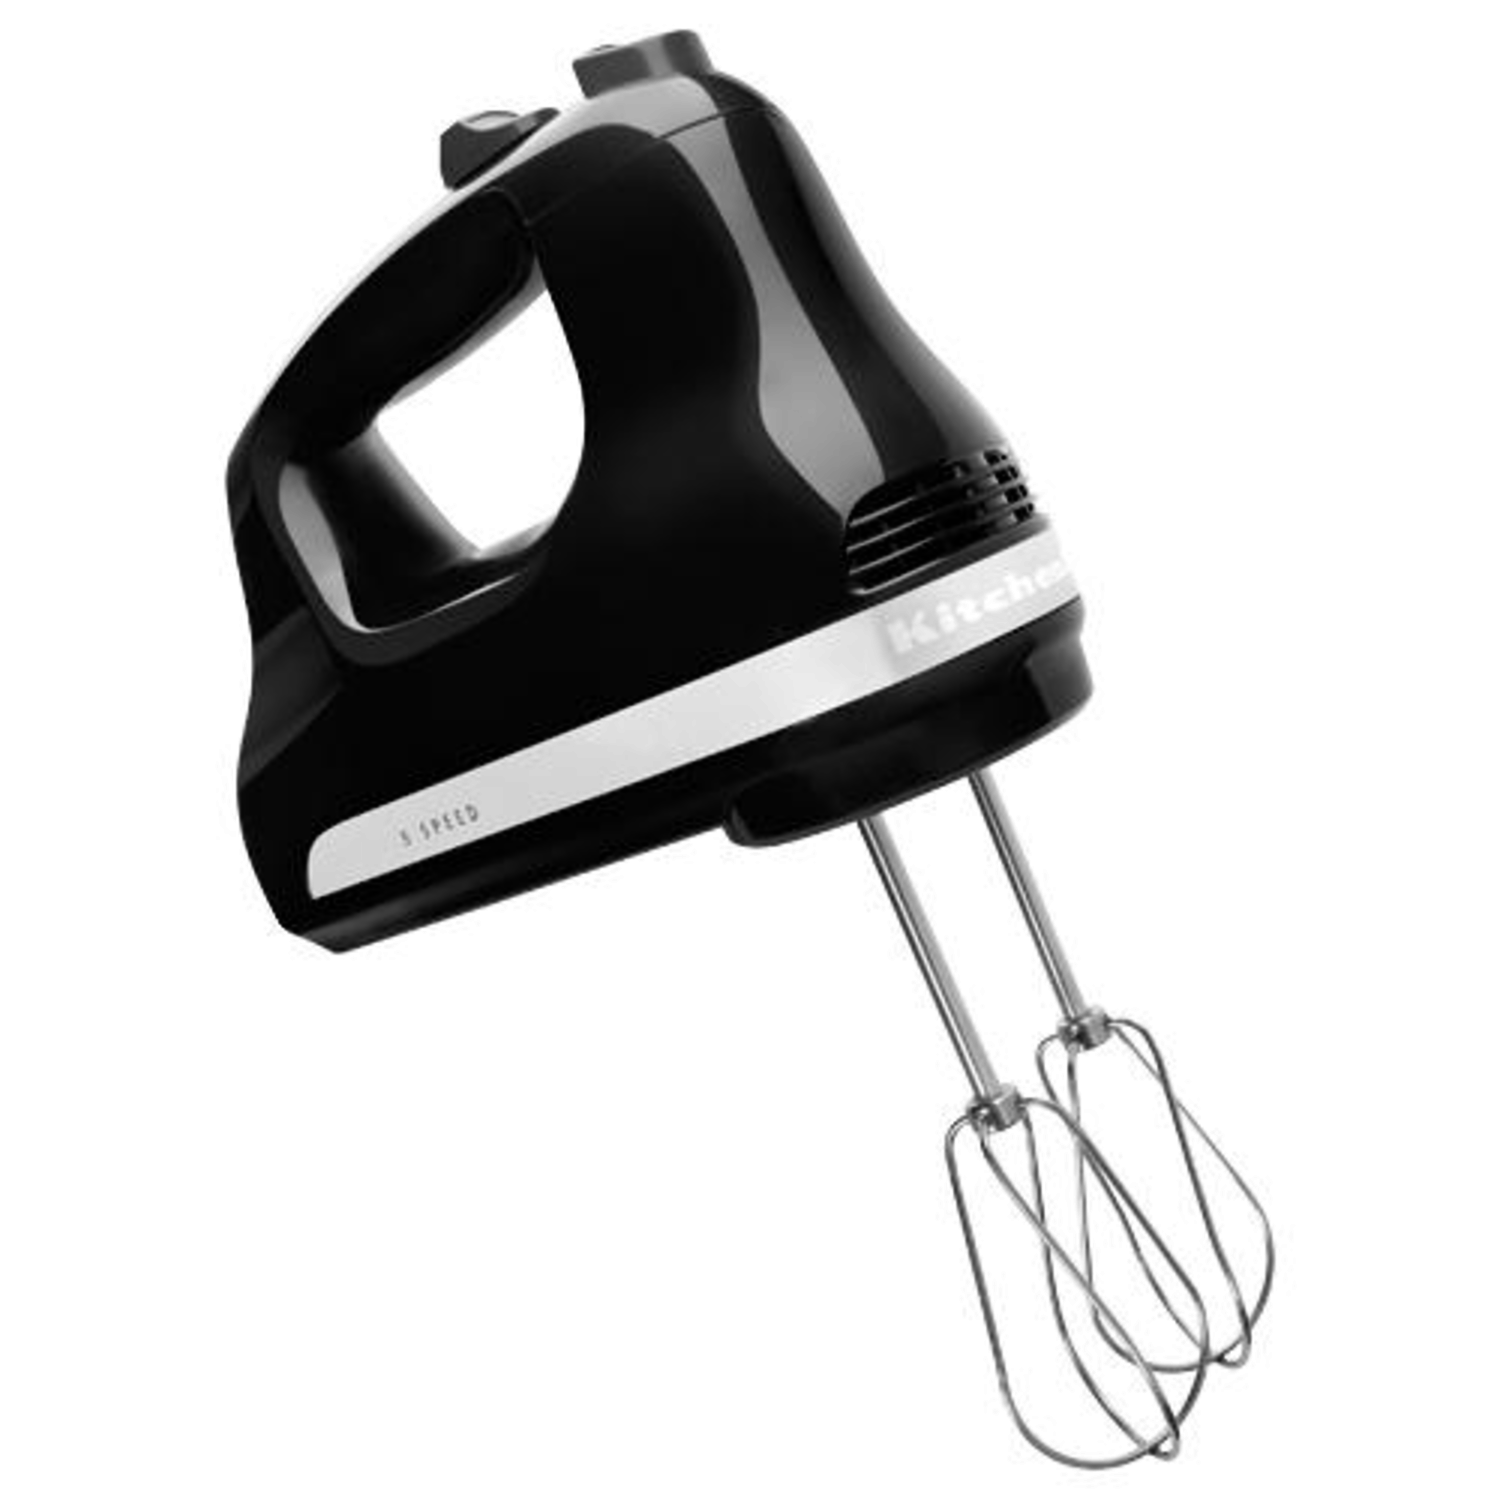 KitchenAid - Cordless 7 Speed Hand Mixer - Onyx Black